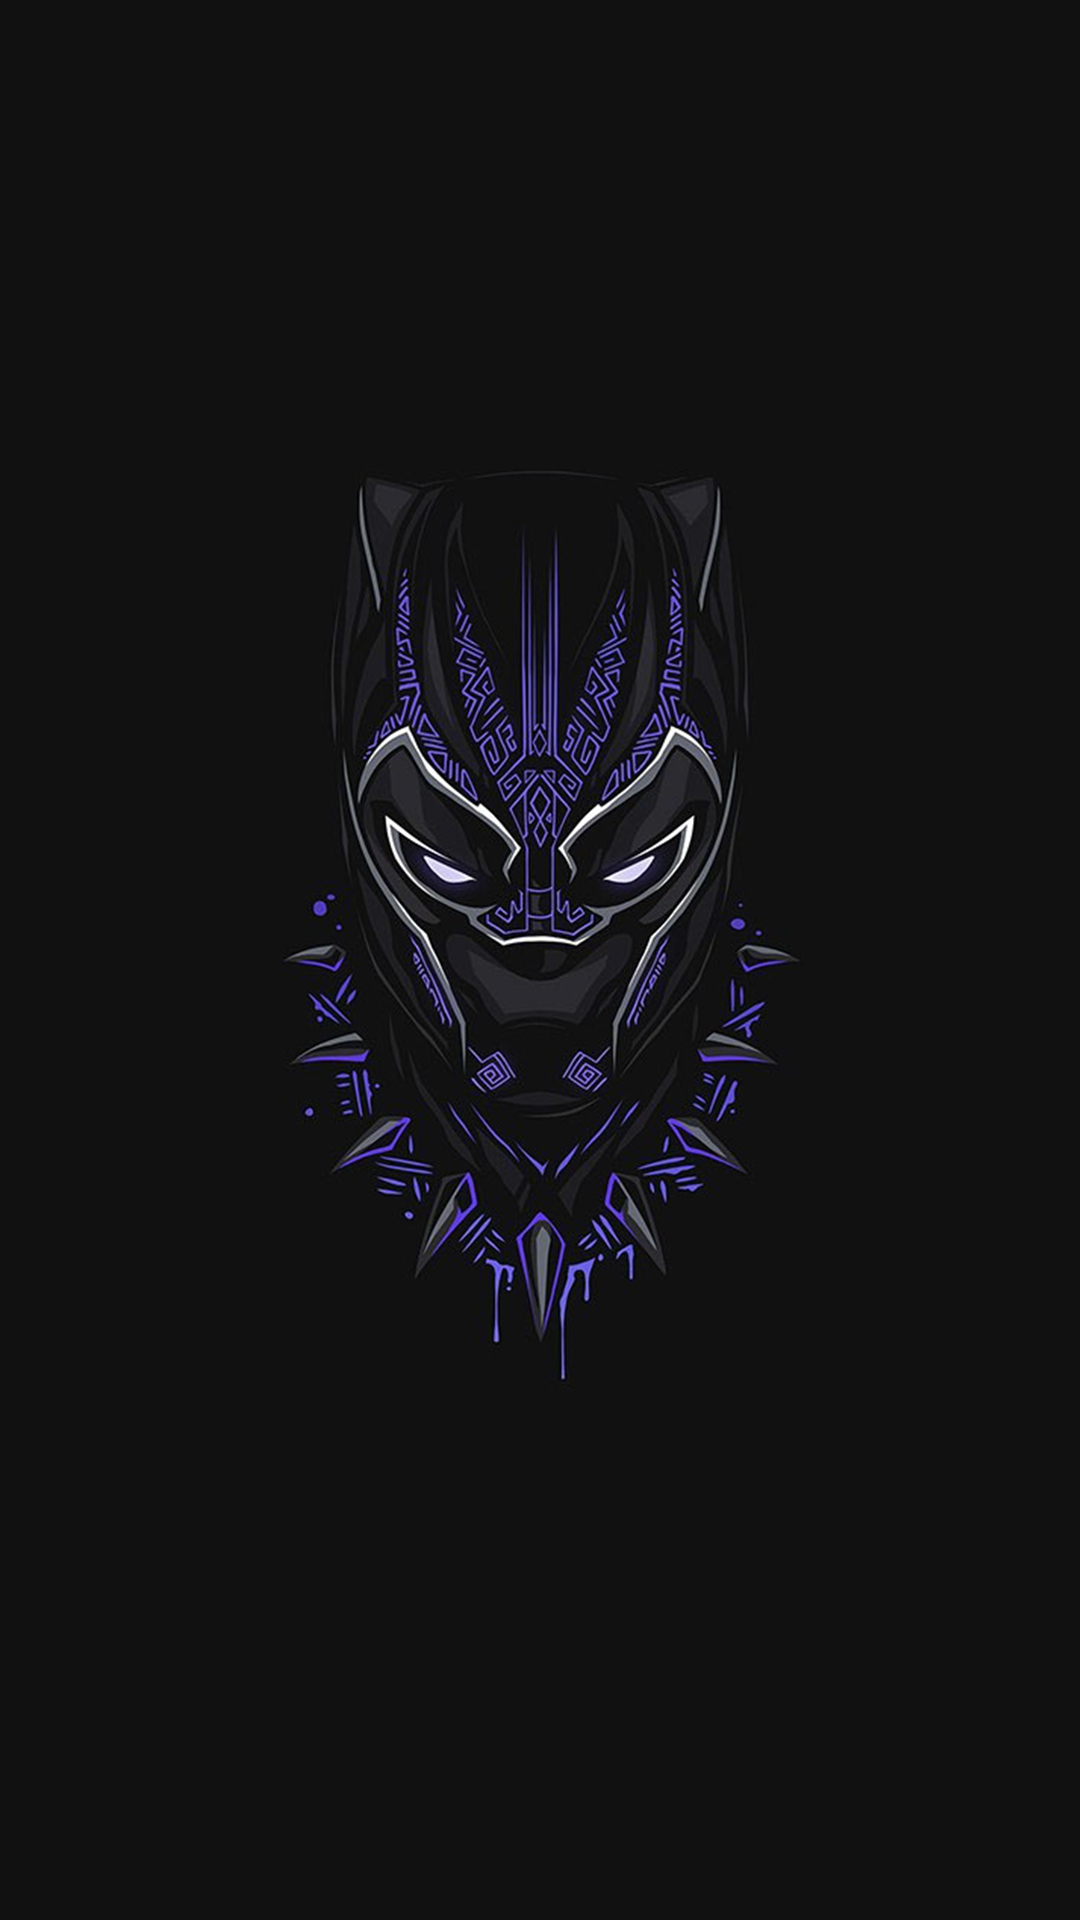  Black  Panther  Purple Minimal iPhone Wallpaper  iPhone 